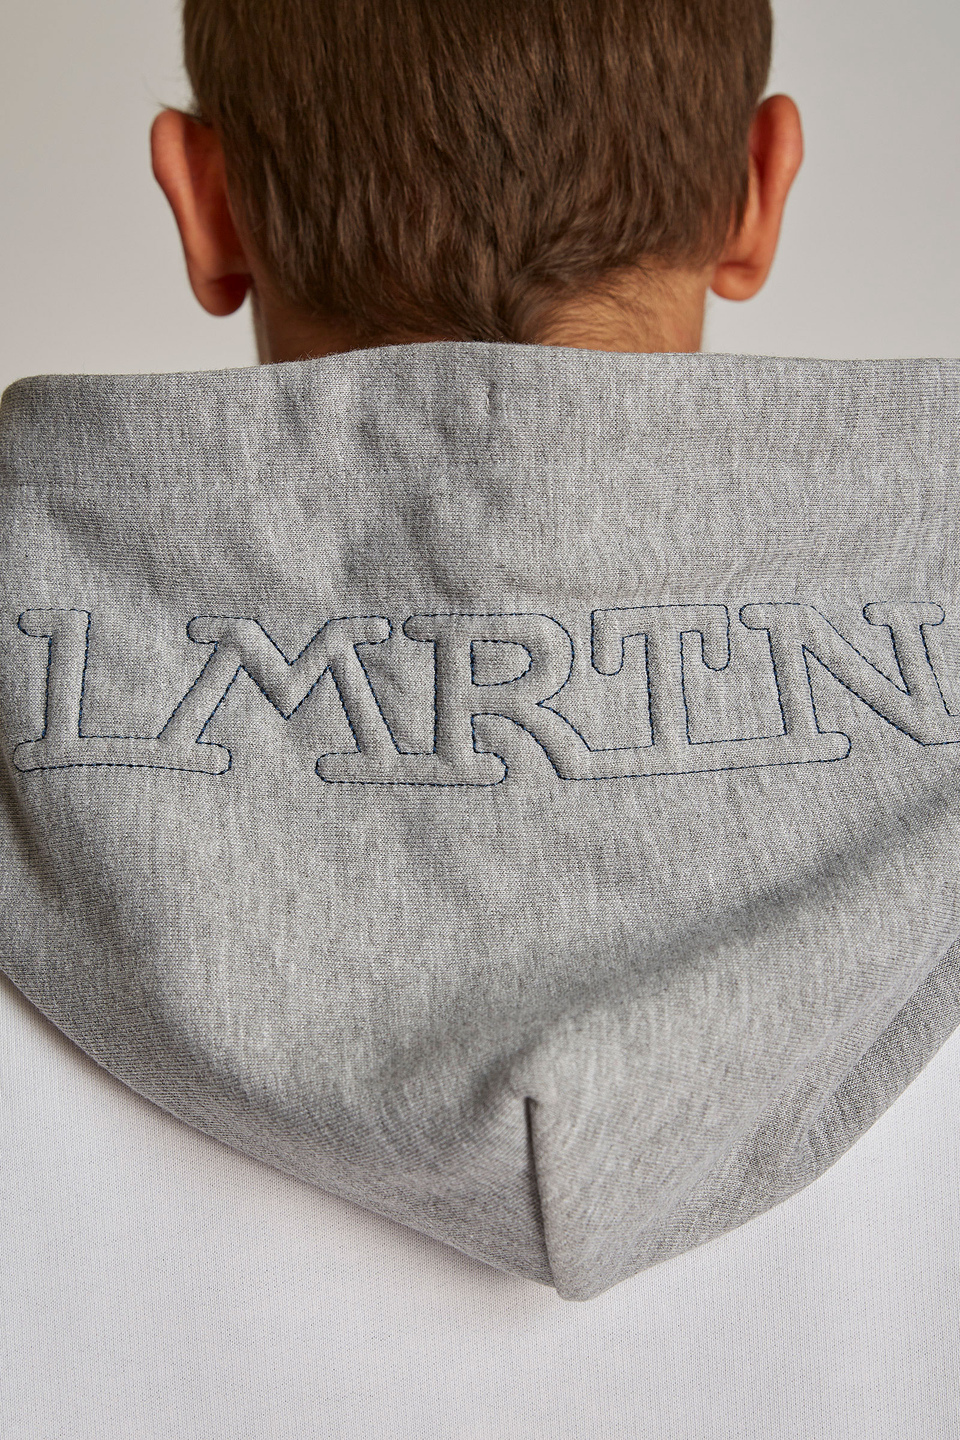 Herren-Sweatshirt aus 100 % Baumwolle mit einer Kapuze in Kontrastoptik, oversized Modell - La Martina - Official Online Shop